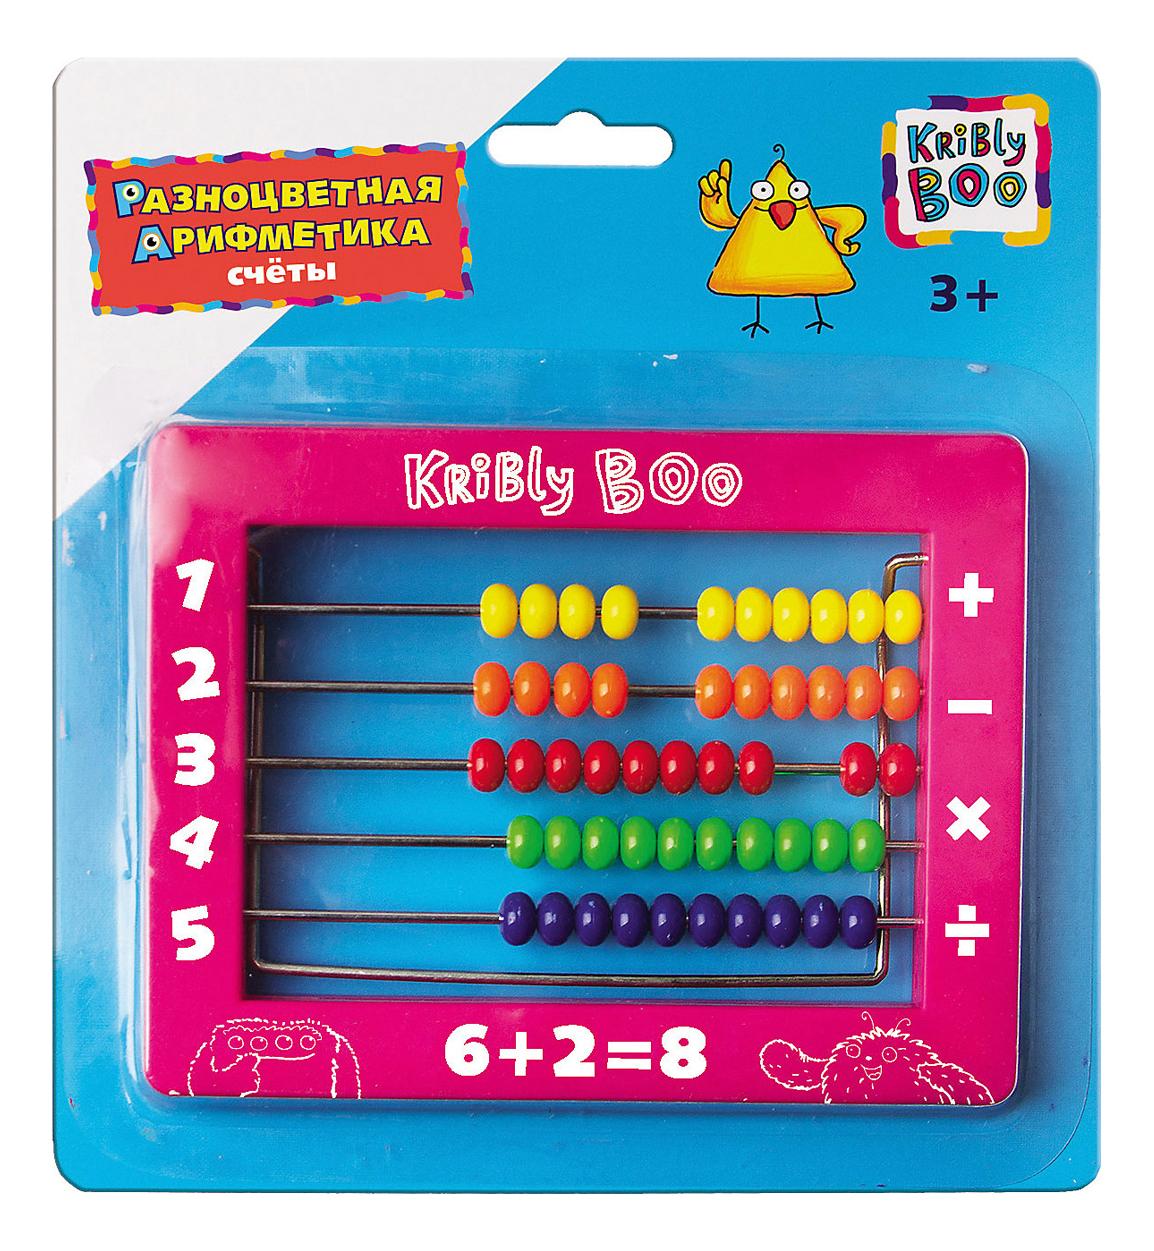 Развивающая игрушка Kribly BOO Разноцветная арифметика